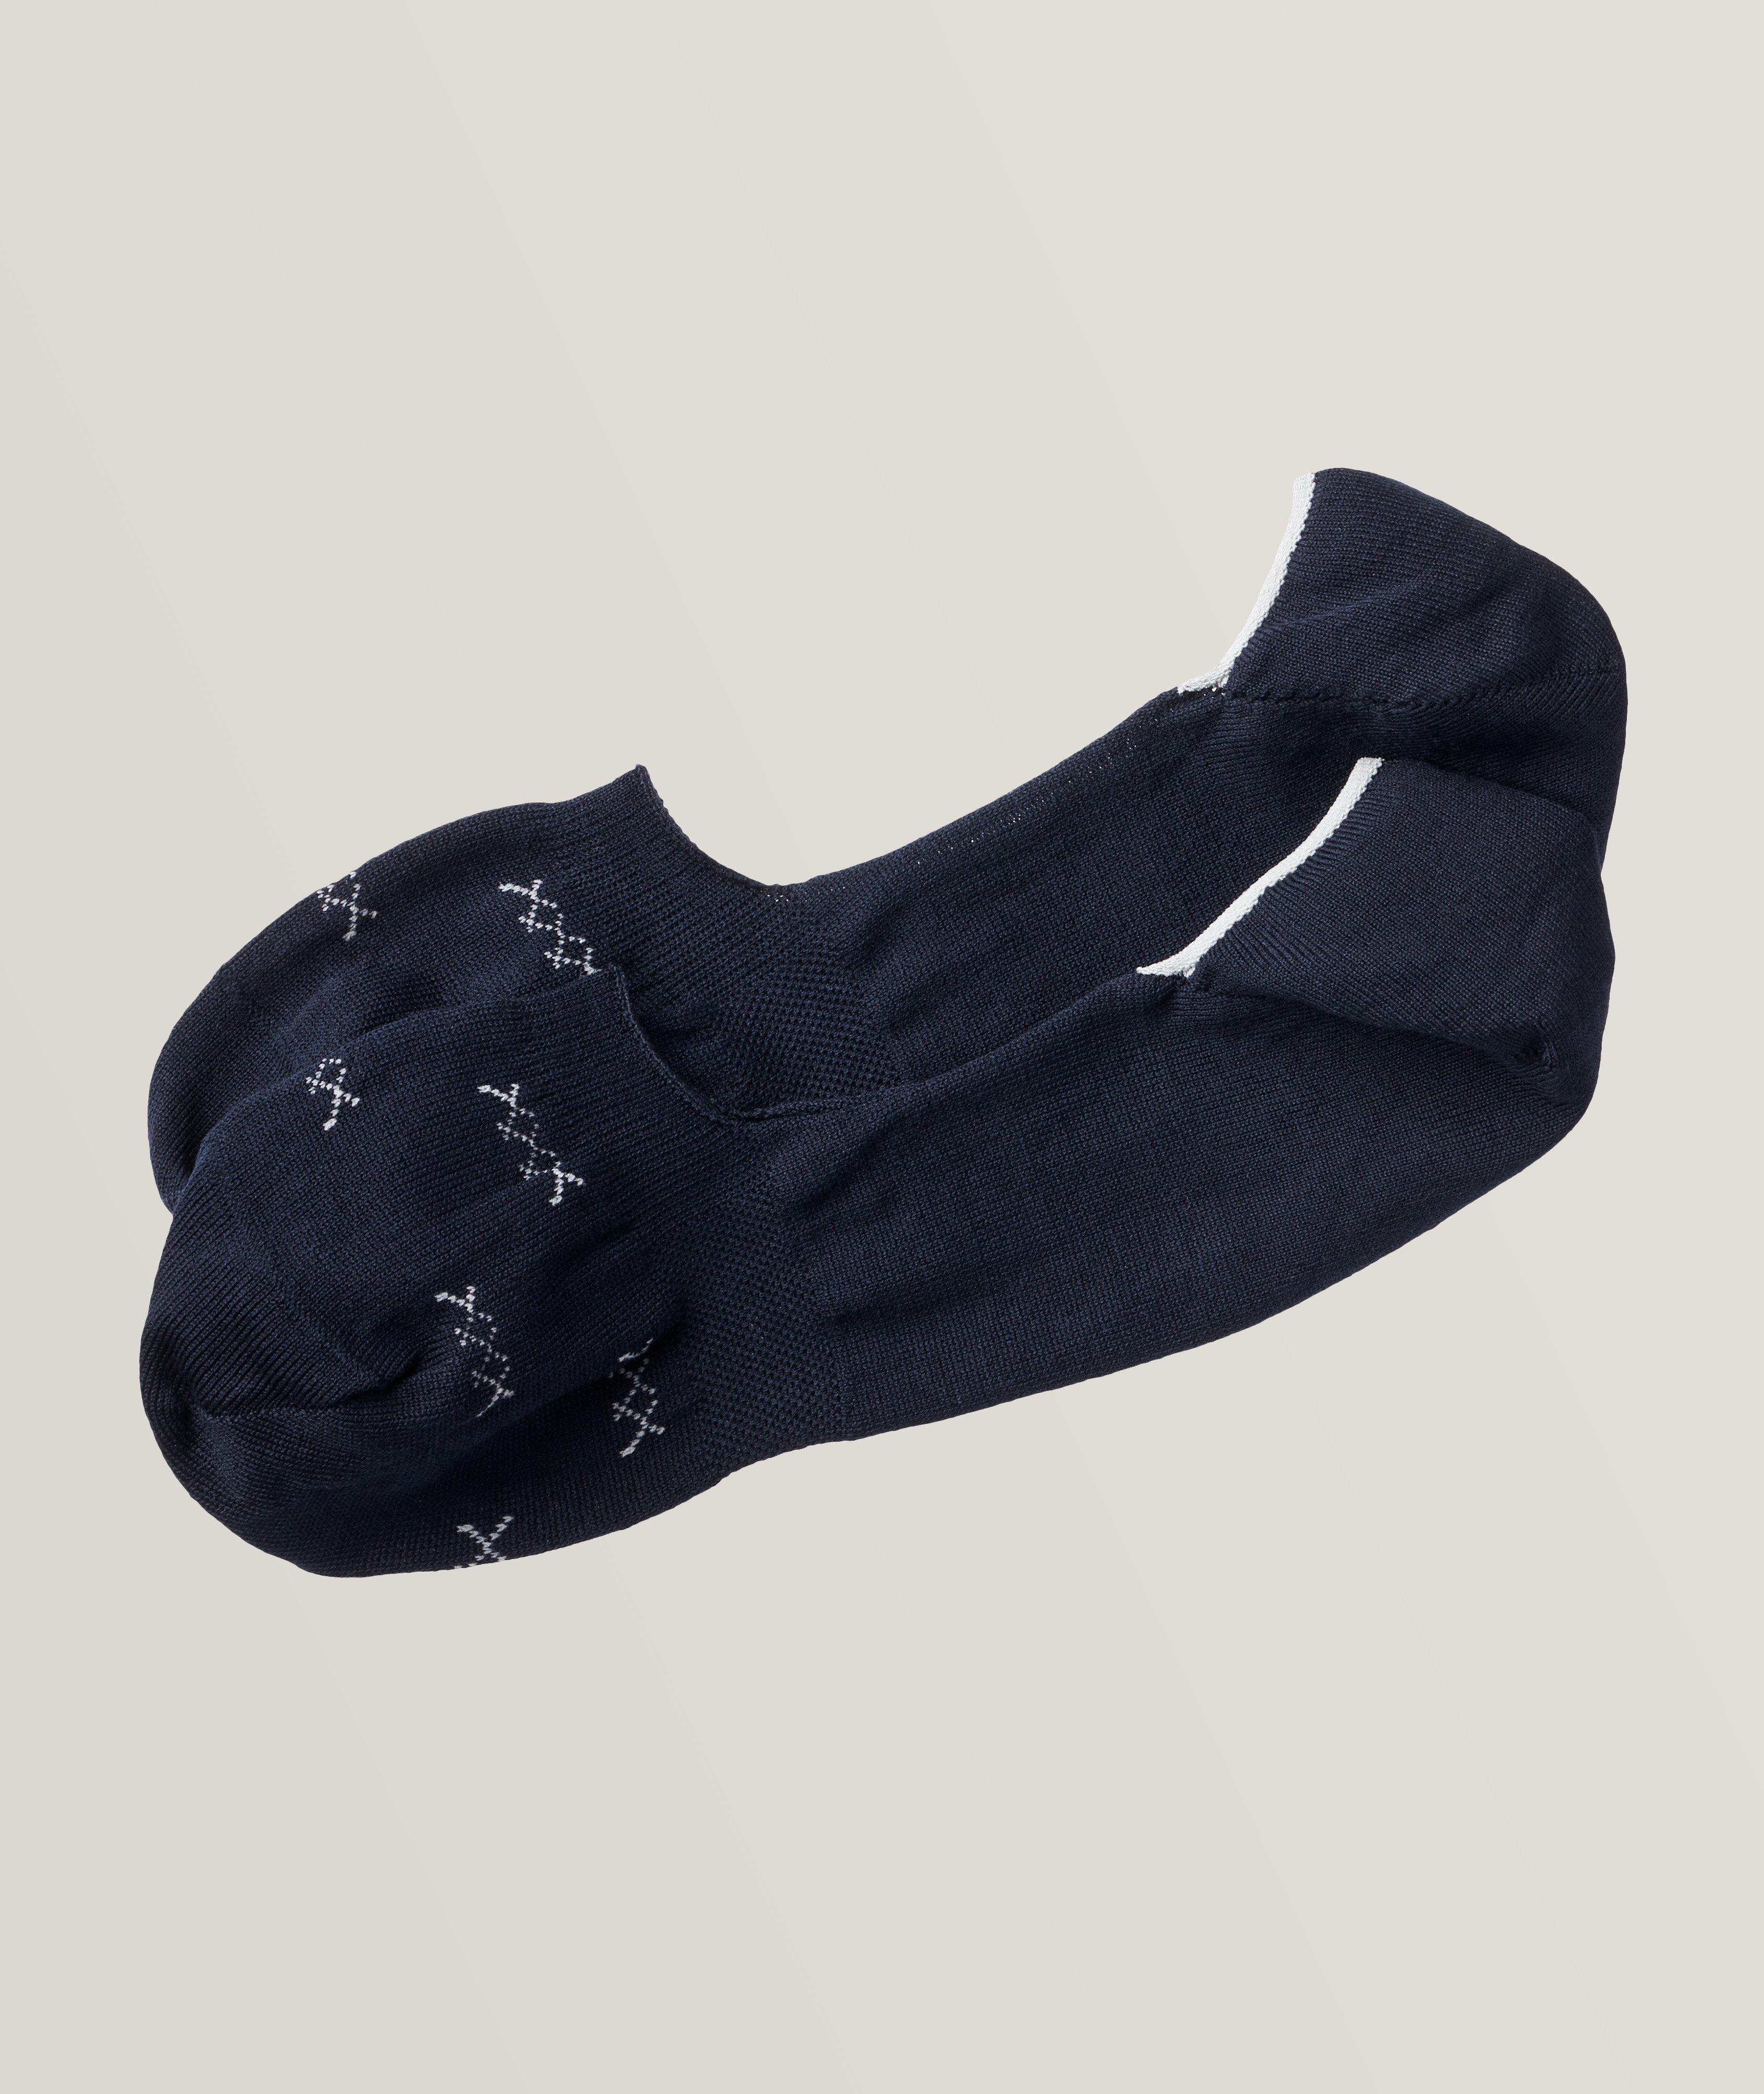 Zegna Triple X Mercerized Cotton No-Show Sock